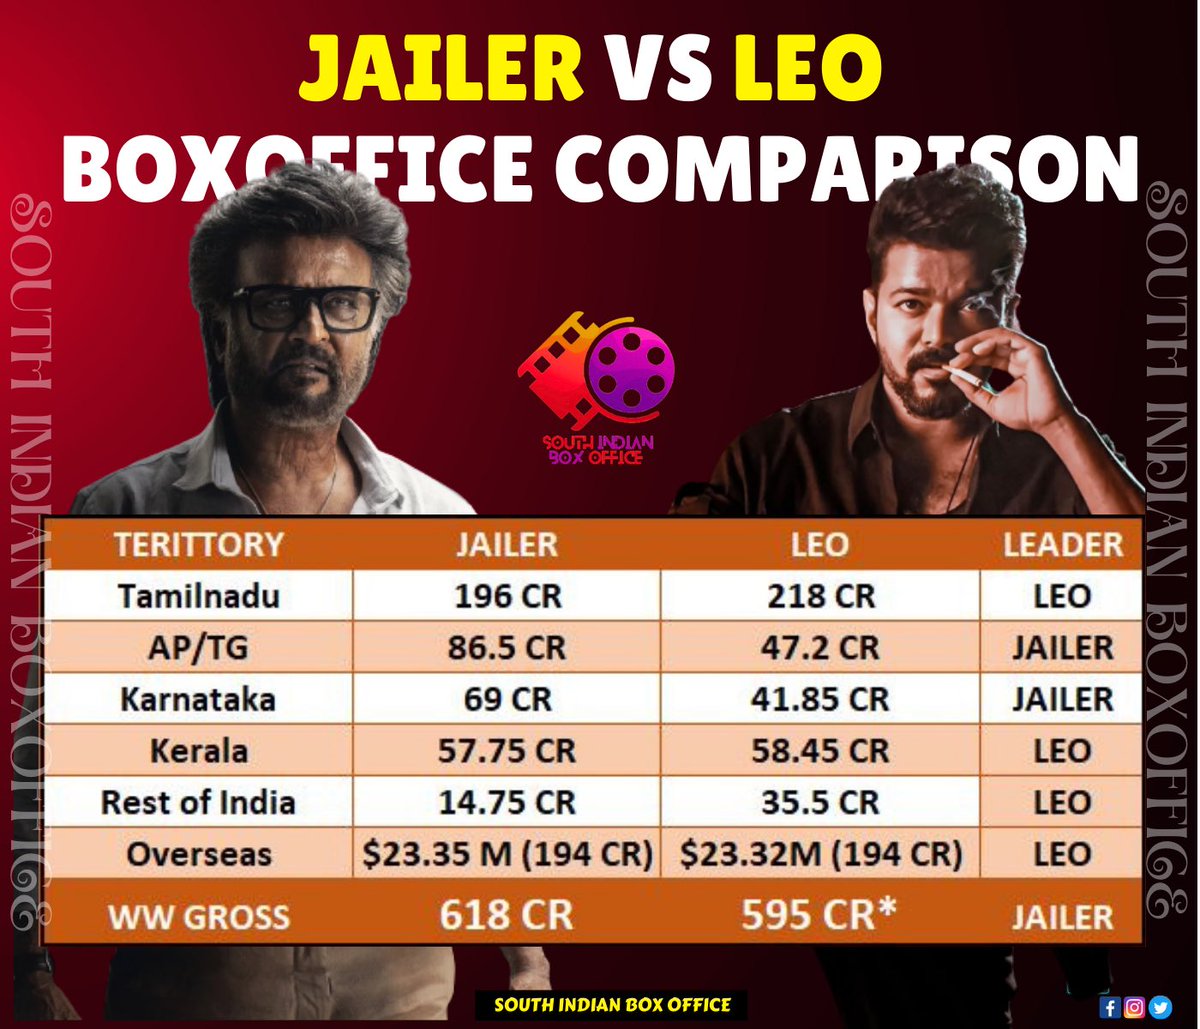 #Jailer Vs #Leo BoxOffice Comparison !

Jailer Final - ₹618 CR
Leo 18 Days - ₹595 CR*

Lets See Who Will be The Topper 🤜🏻🤛🏻

#ThalapathyVijay #SuperstarRajini